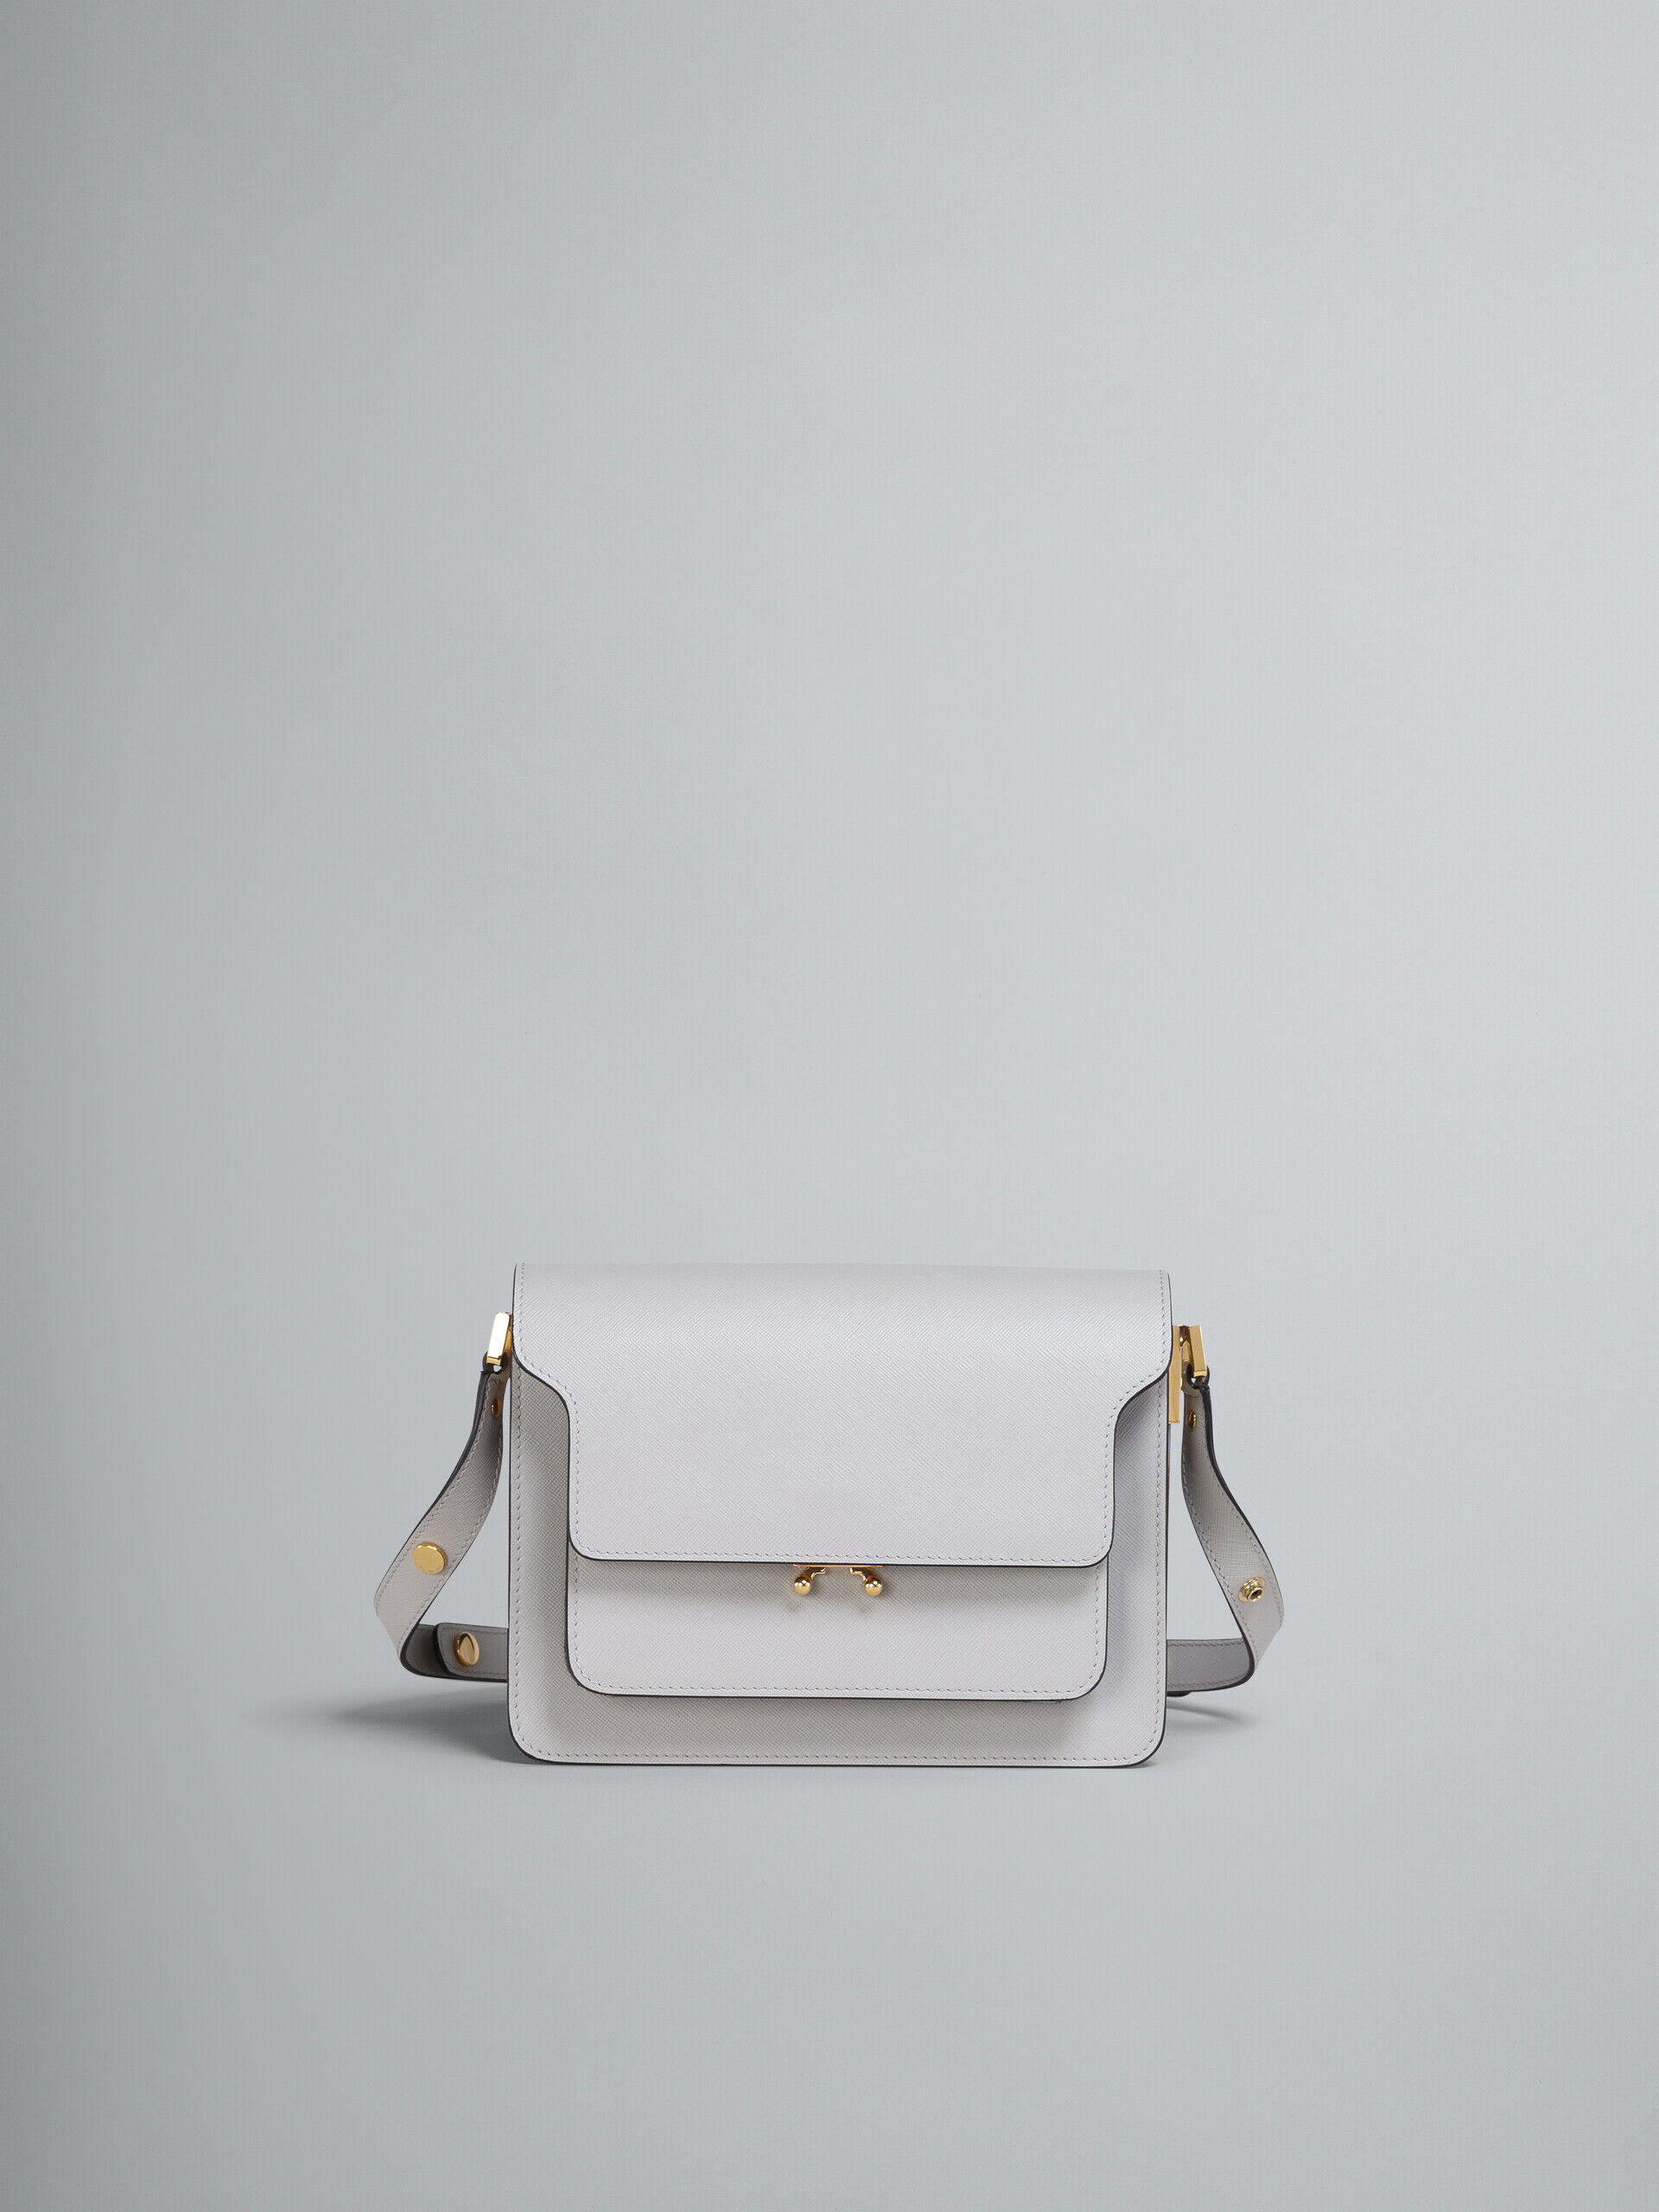 Handbags | Marni